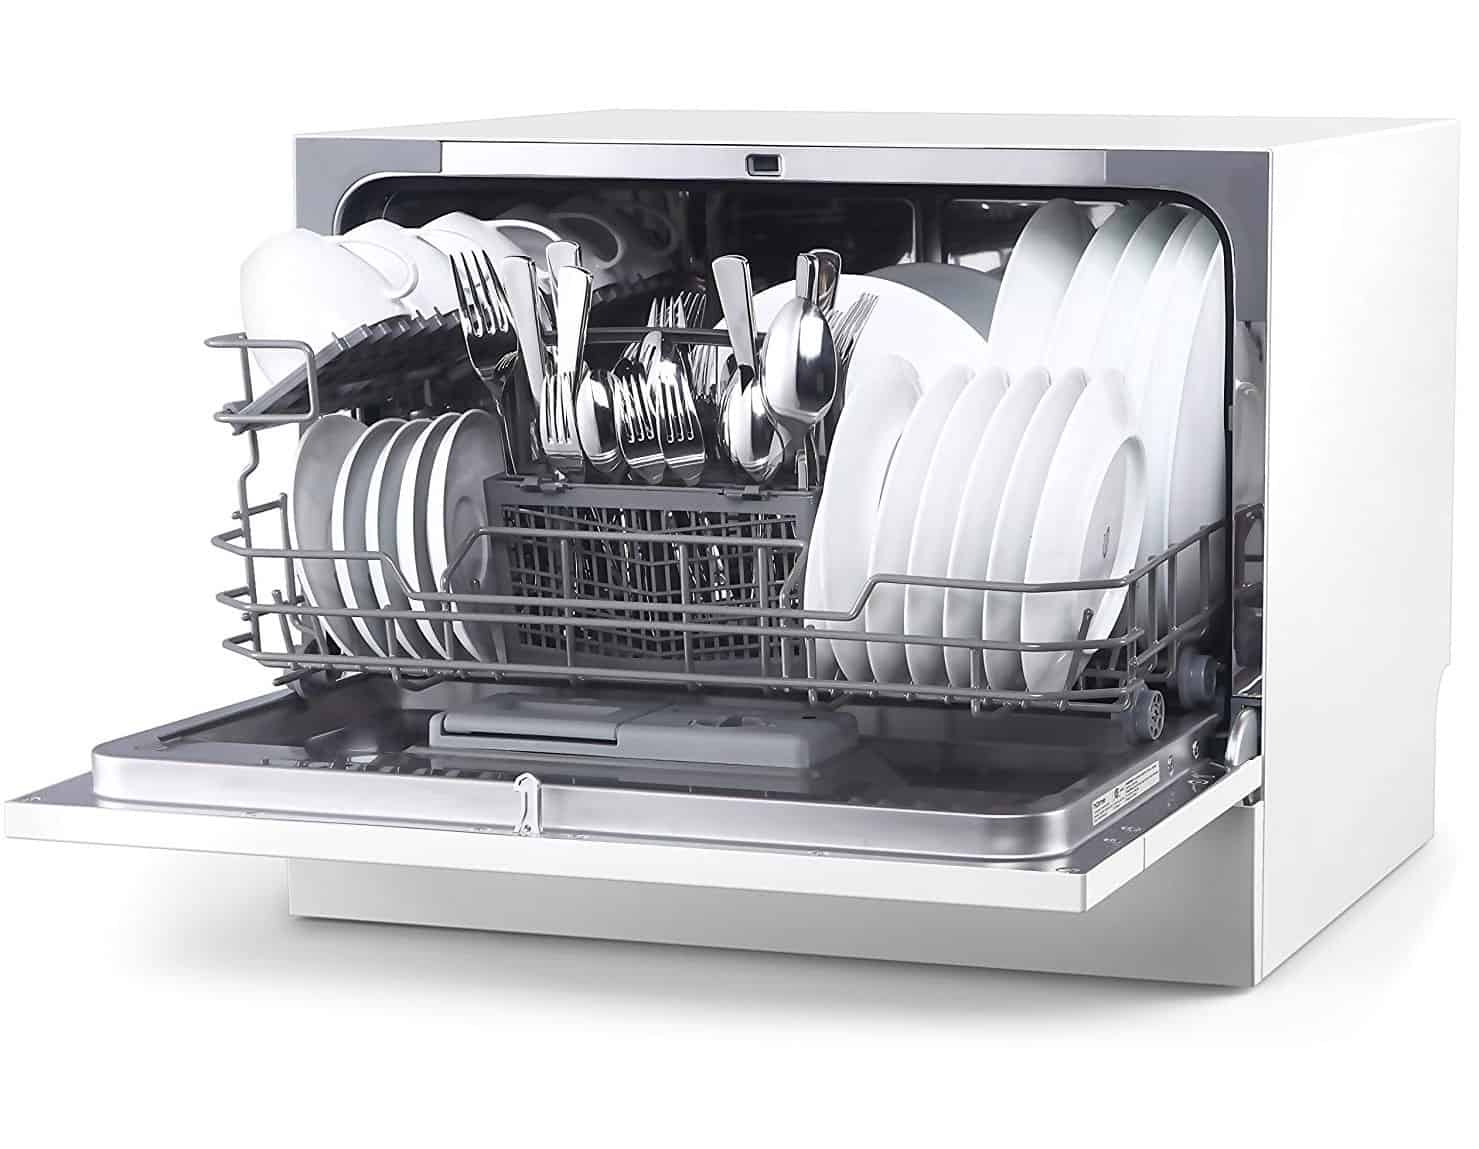 Mini Countertop Dishwasher Things I Desire